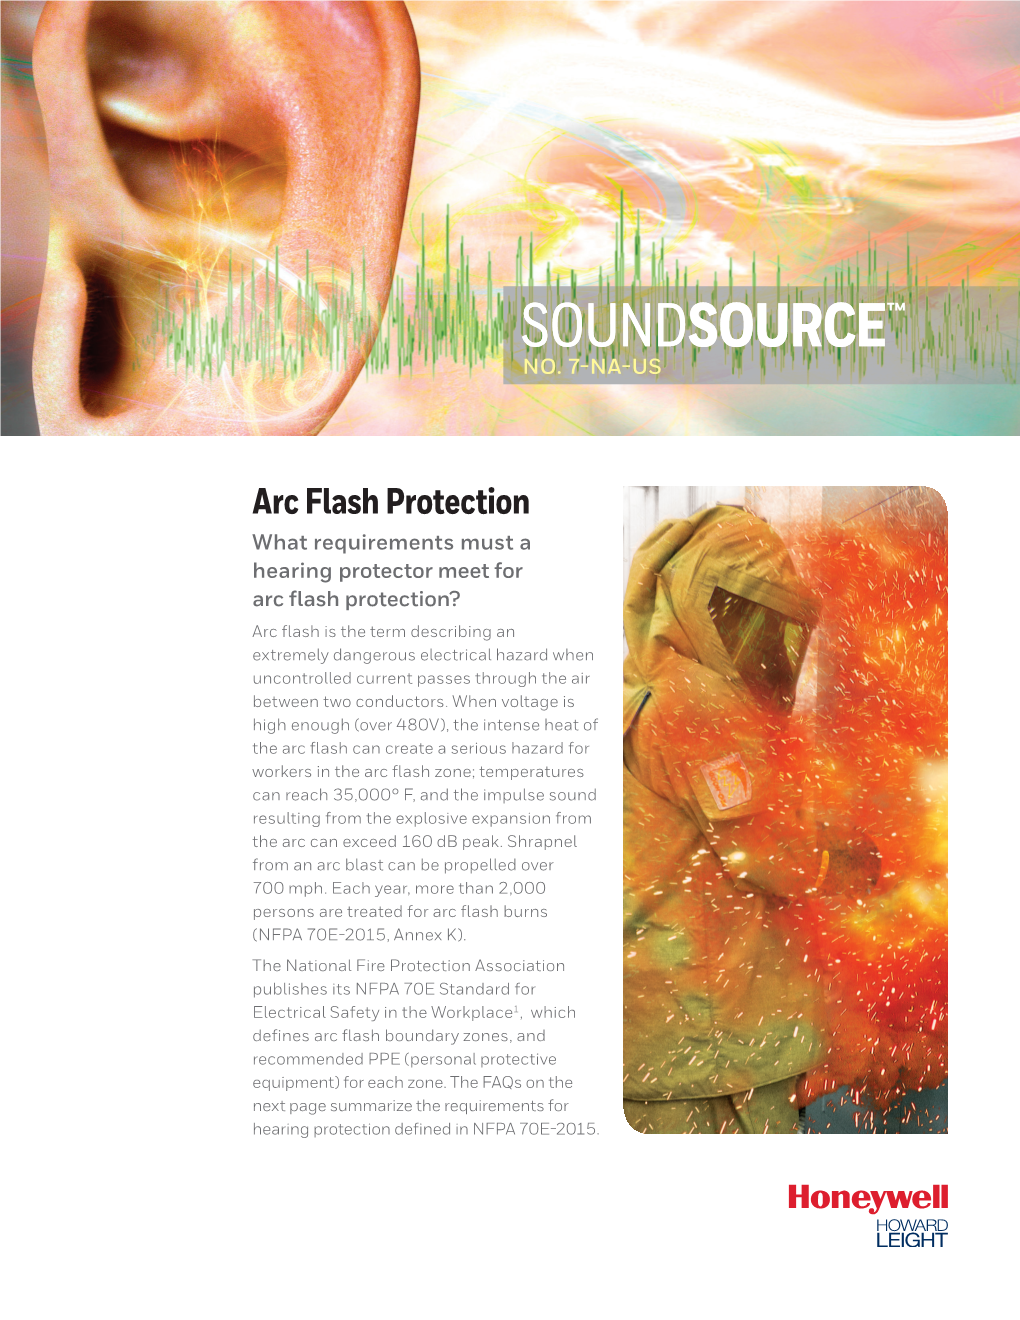 Honeywell Howard Leight Arc Flash Protection Brochure